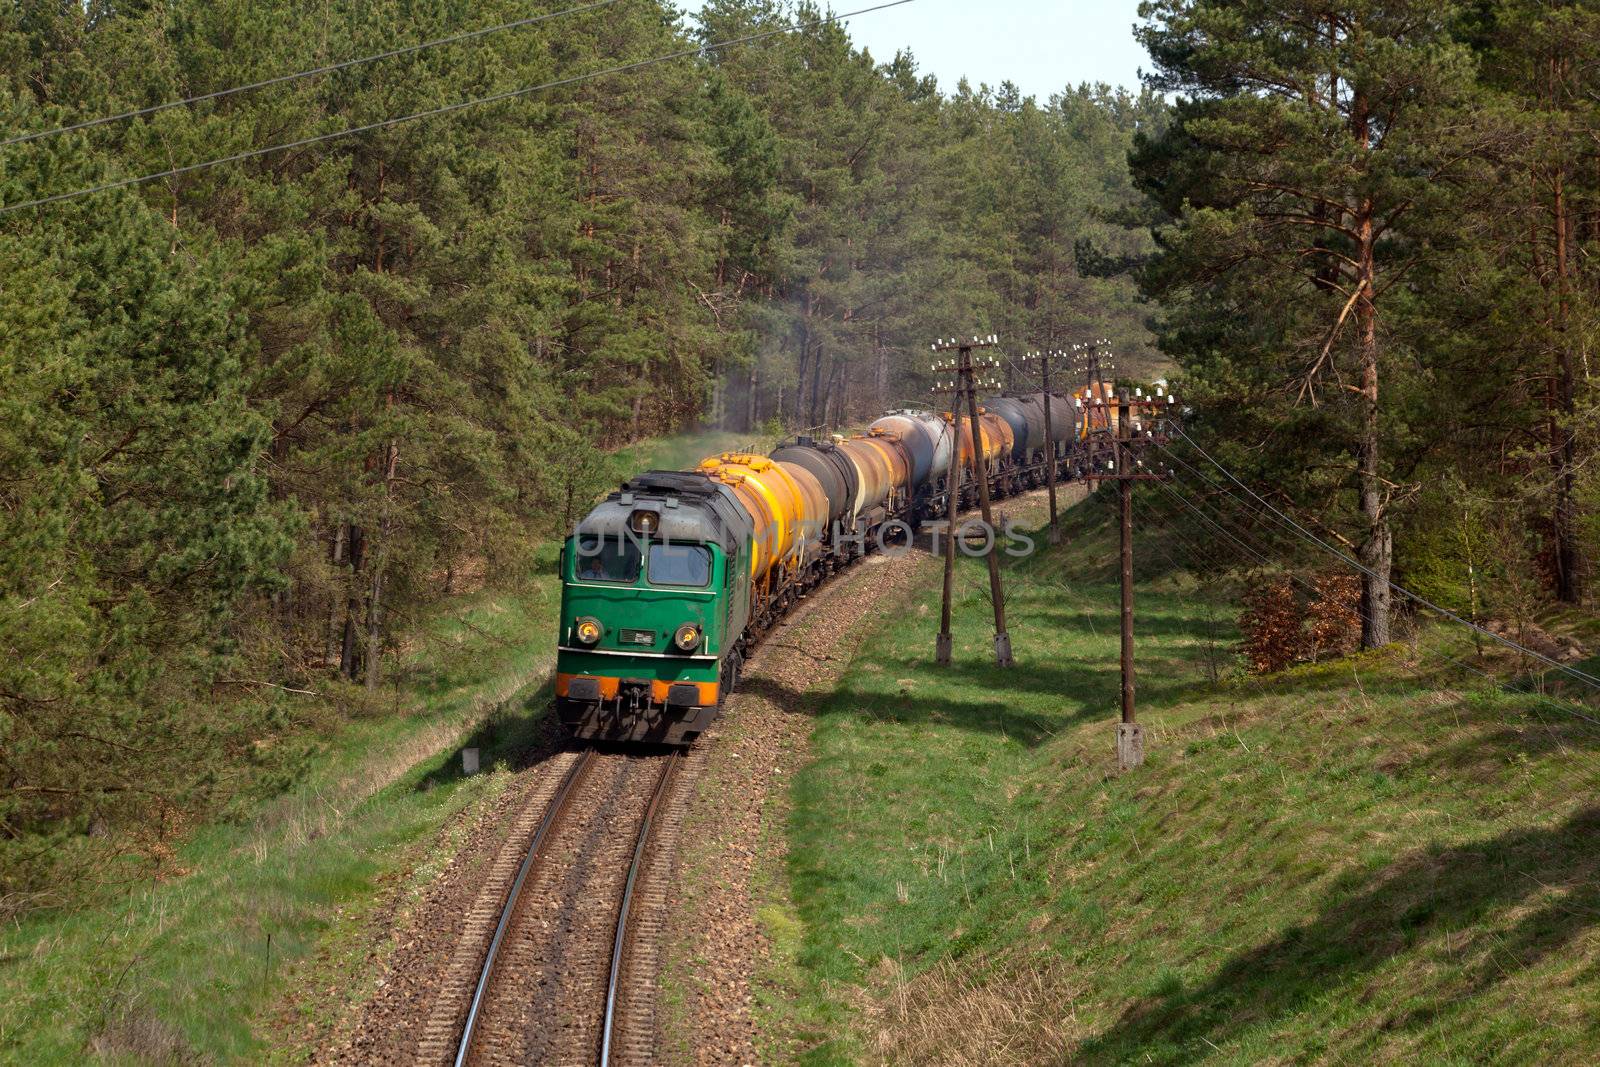 Freight diesel train by remik44992